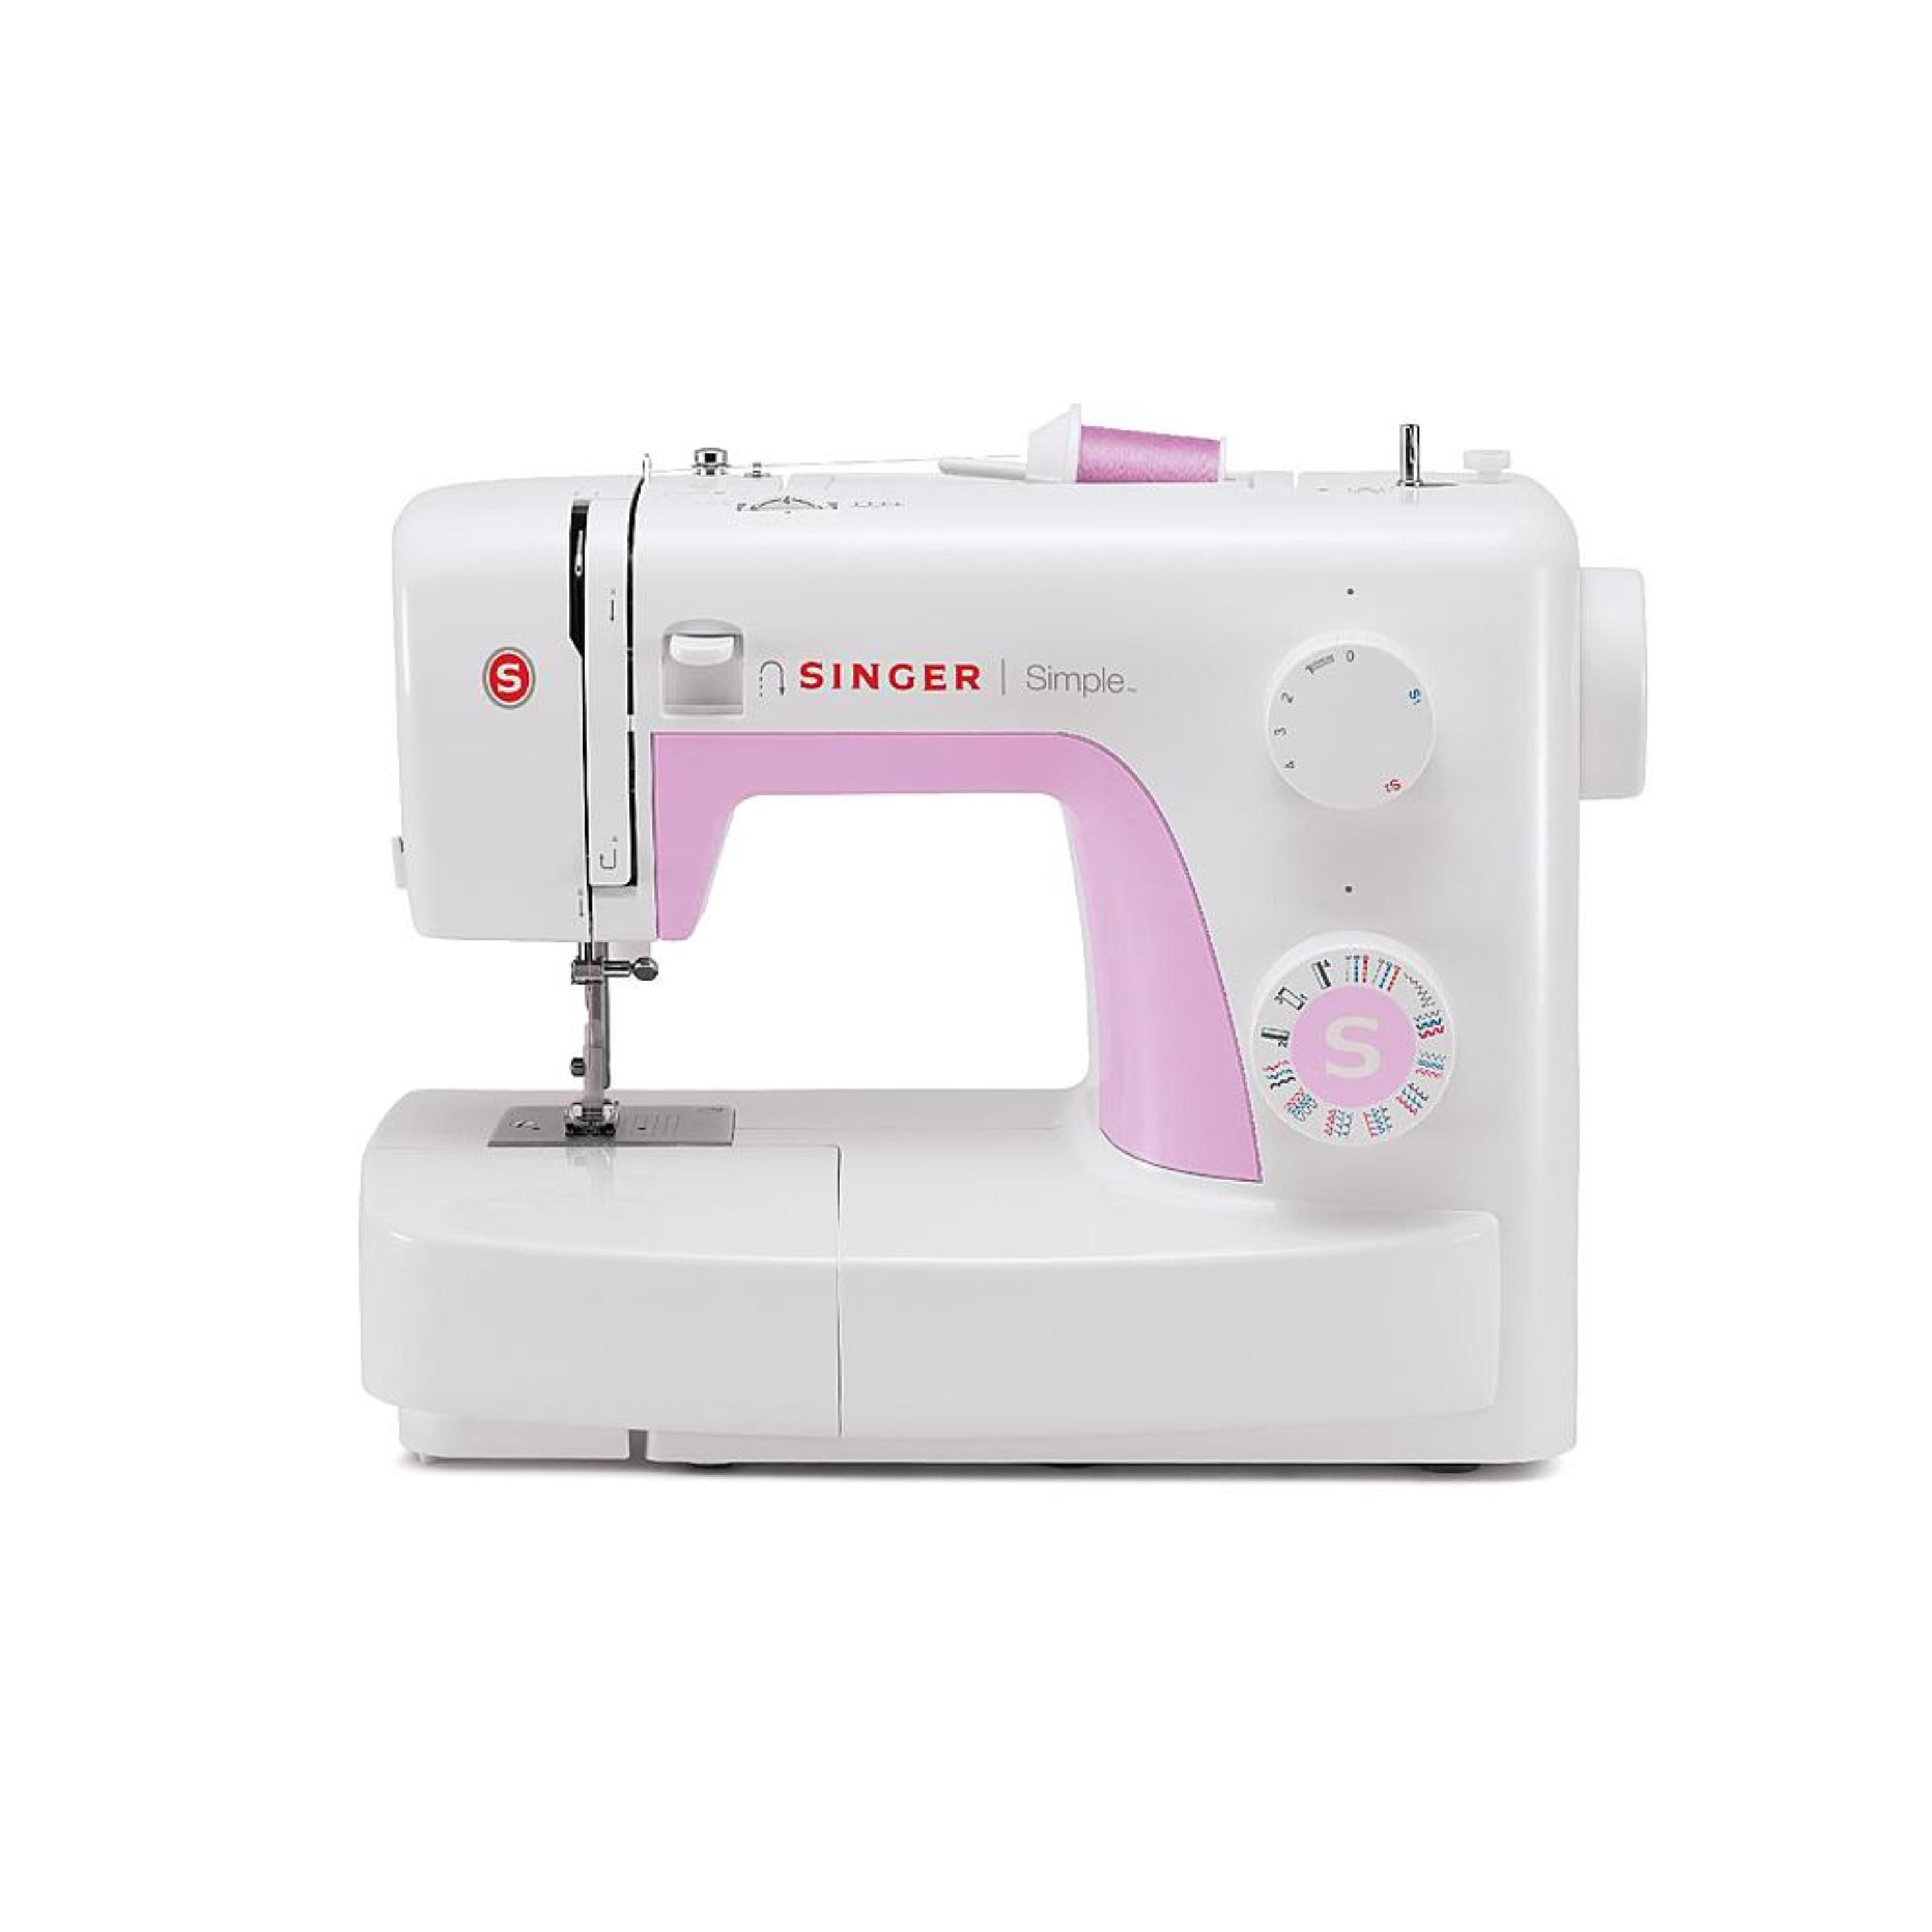 Singer Sınger Simple 3223 Sewing Machine - Sewing Machines - AliExpress